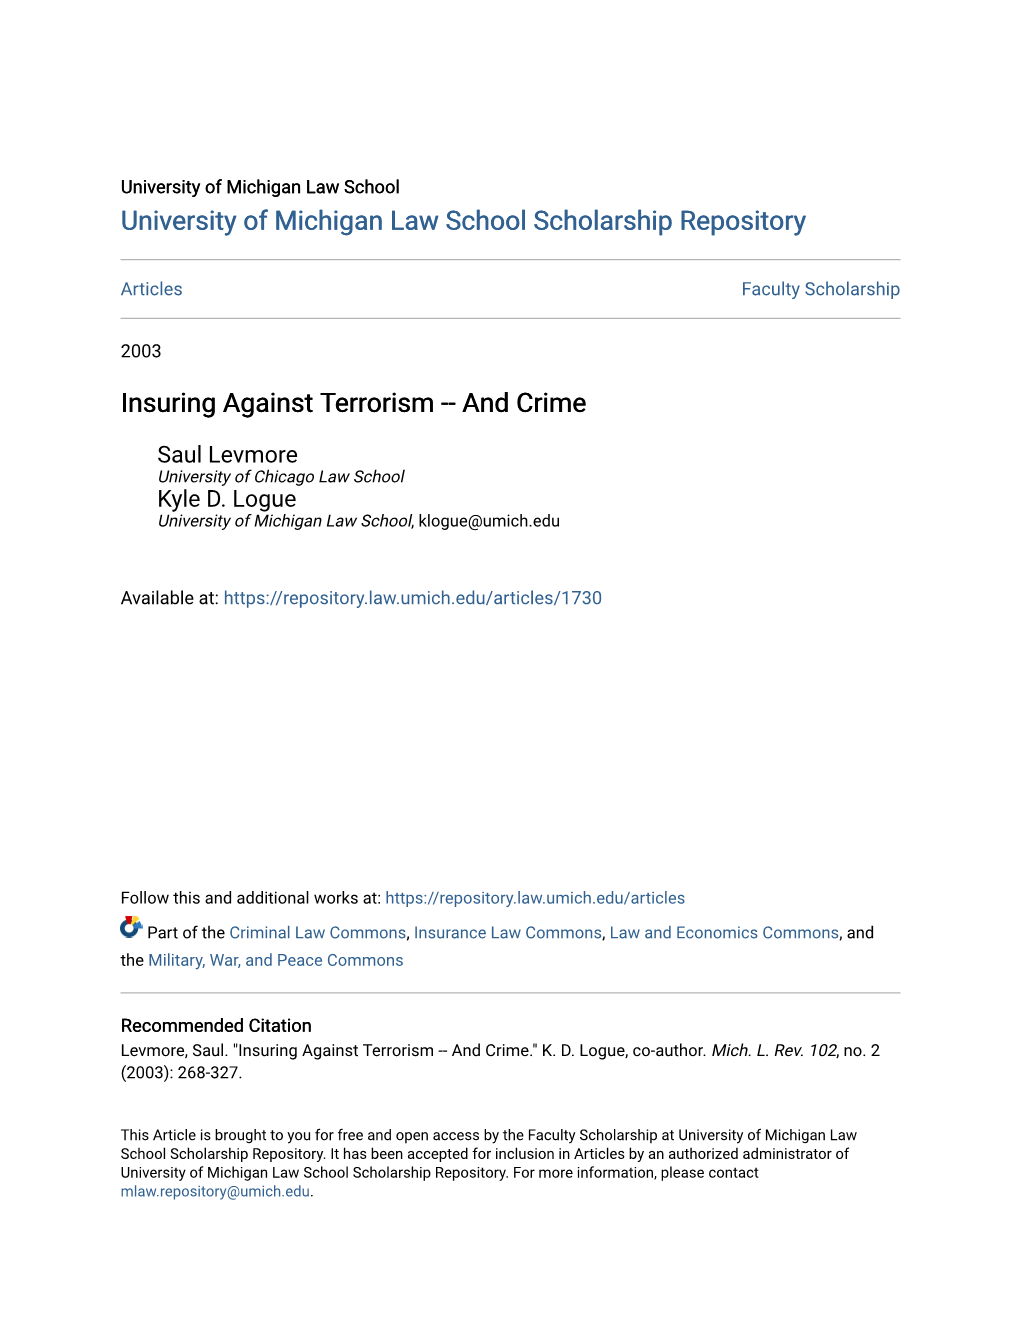 Insuring Against Terrorism -- and Crime